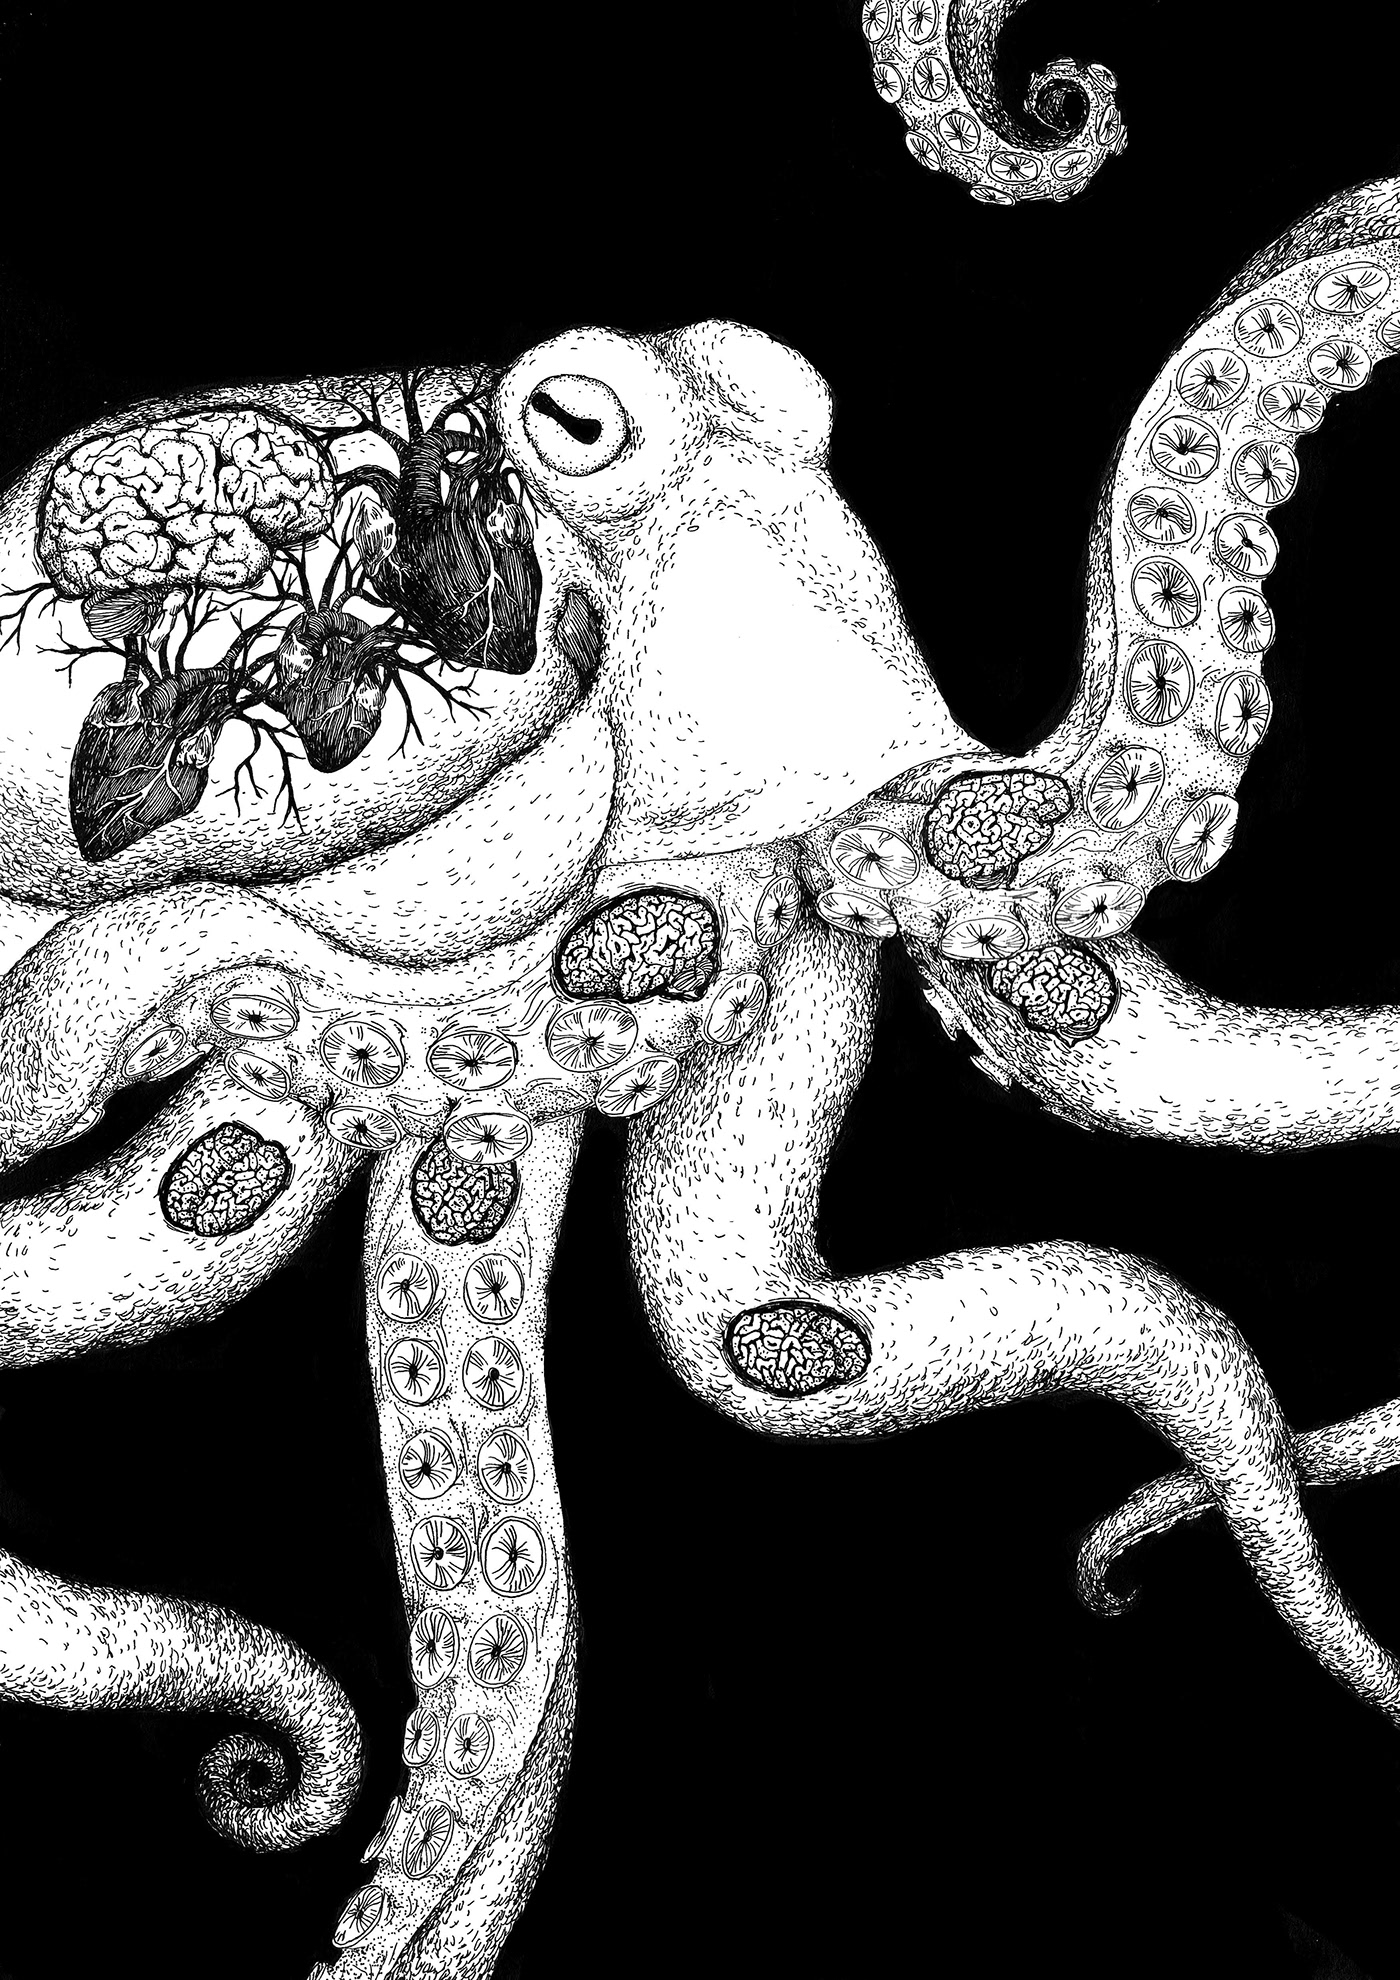 animal science Cabinet Of Curiosity singe monkey anatomy intelligence rat fish black Rotring Nature octopus parrot Cat